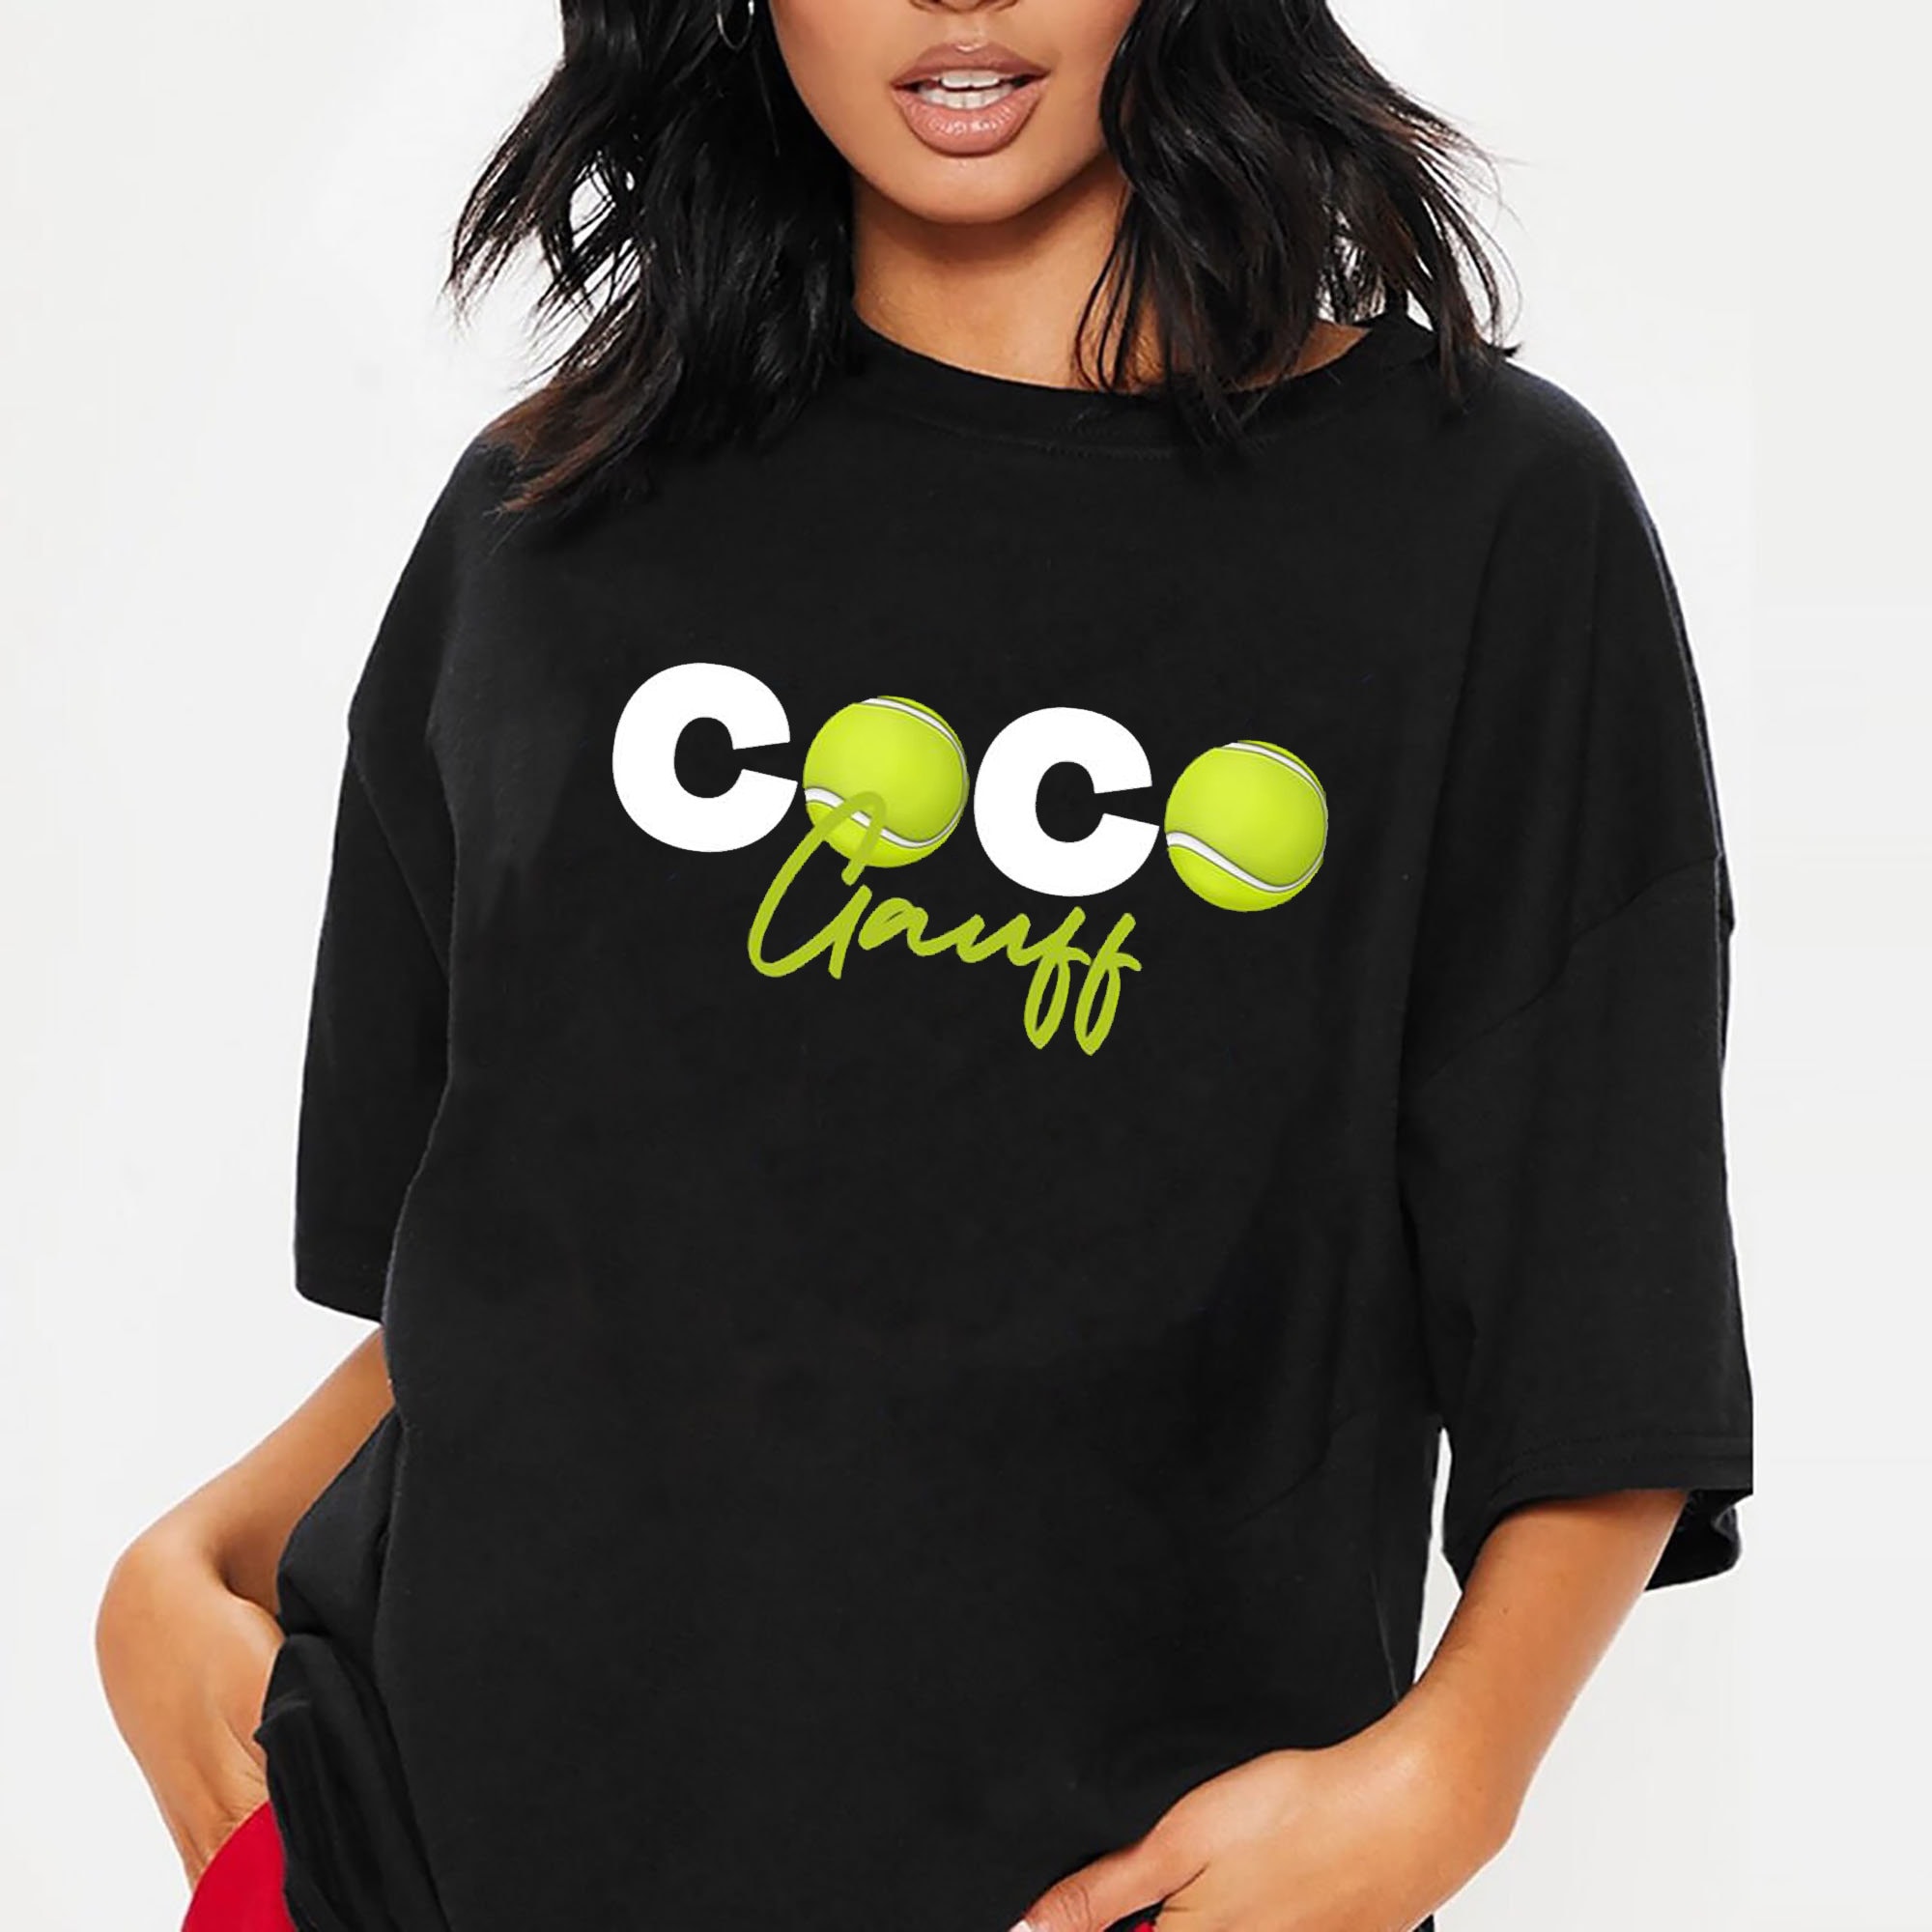 Call Me Coco Gauff T Shirt